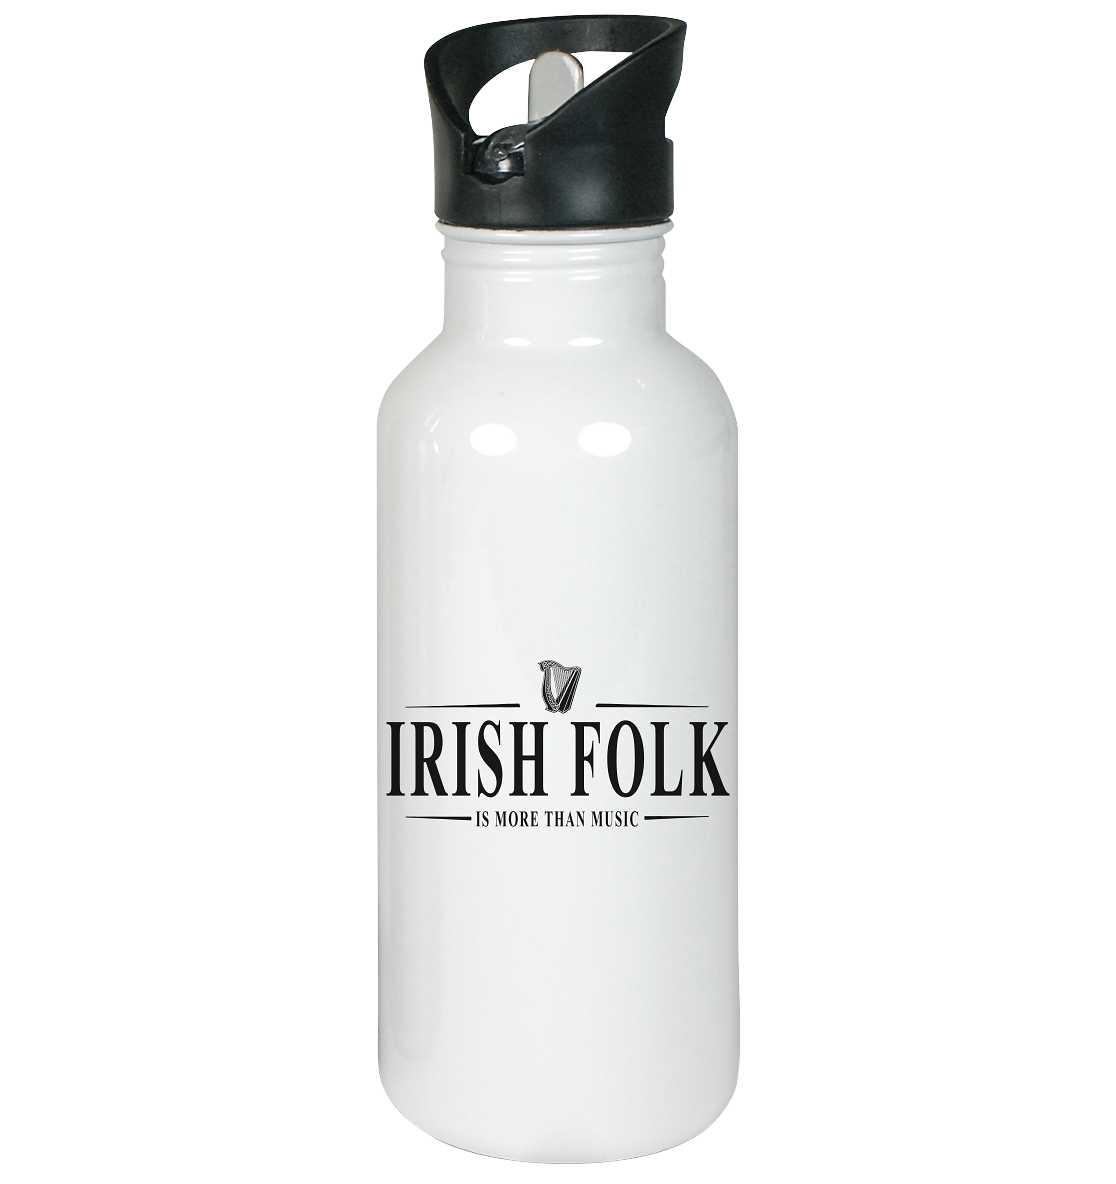 Irish Folk "Is More Than Music" - Edelstahl-Trinkflasche